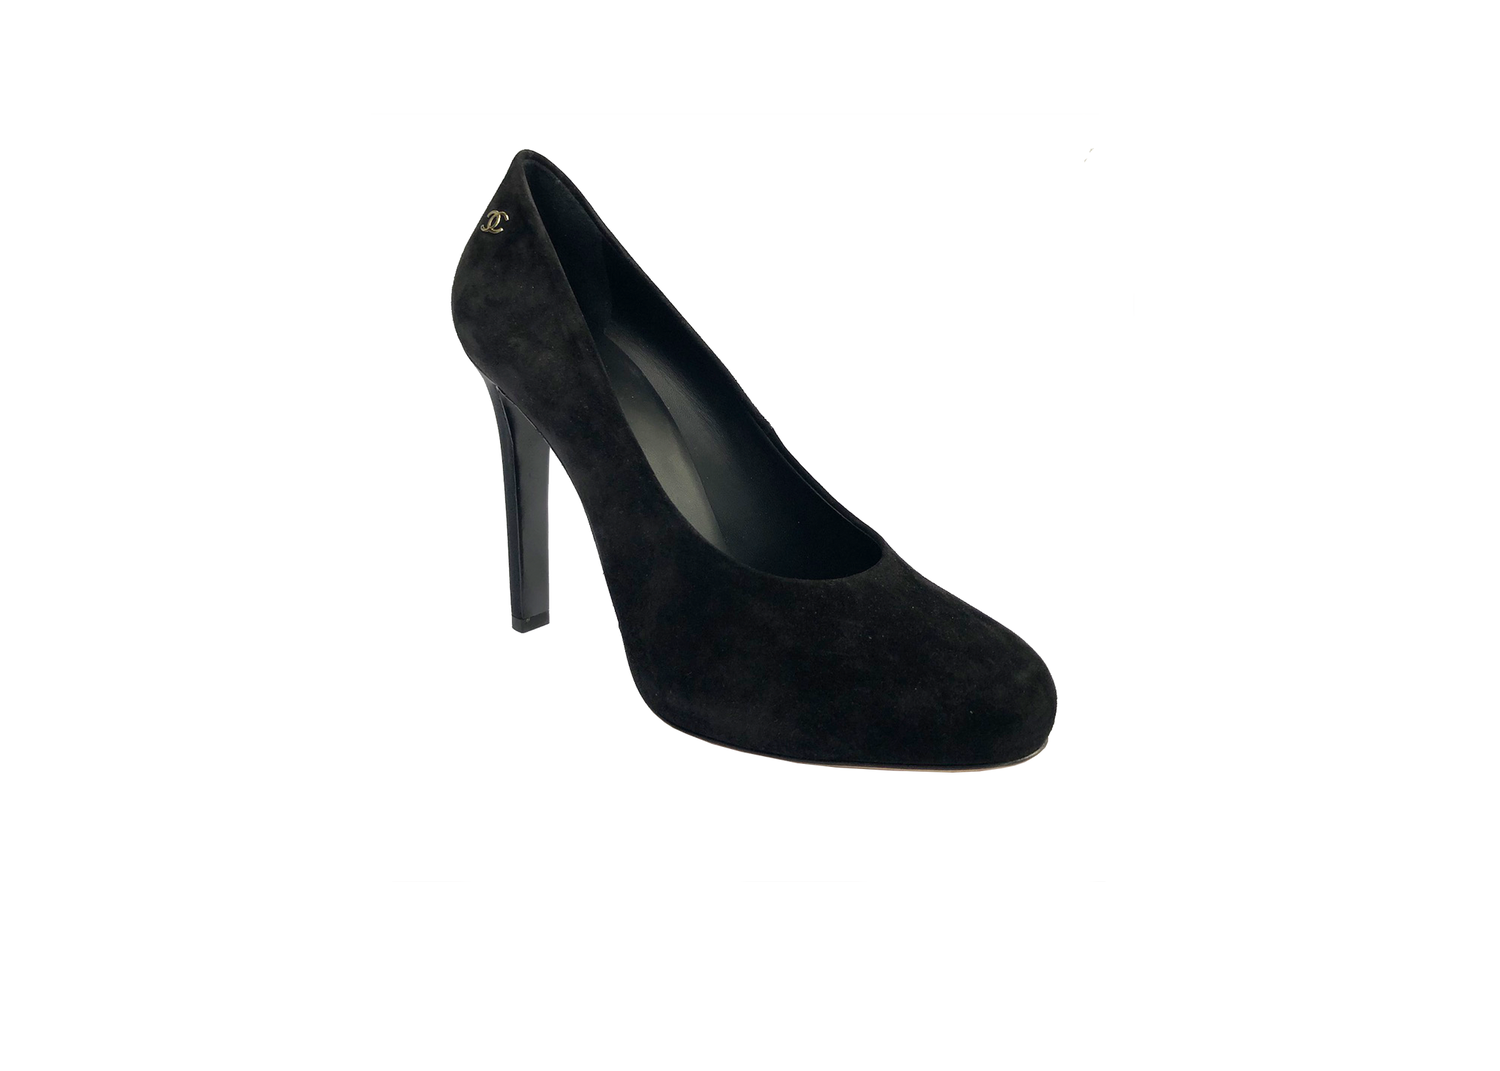 Chanel Black Classic Pump Heels Shoes — Petunia's Consignment Boutique